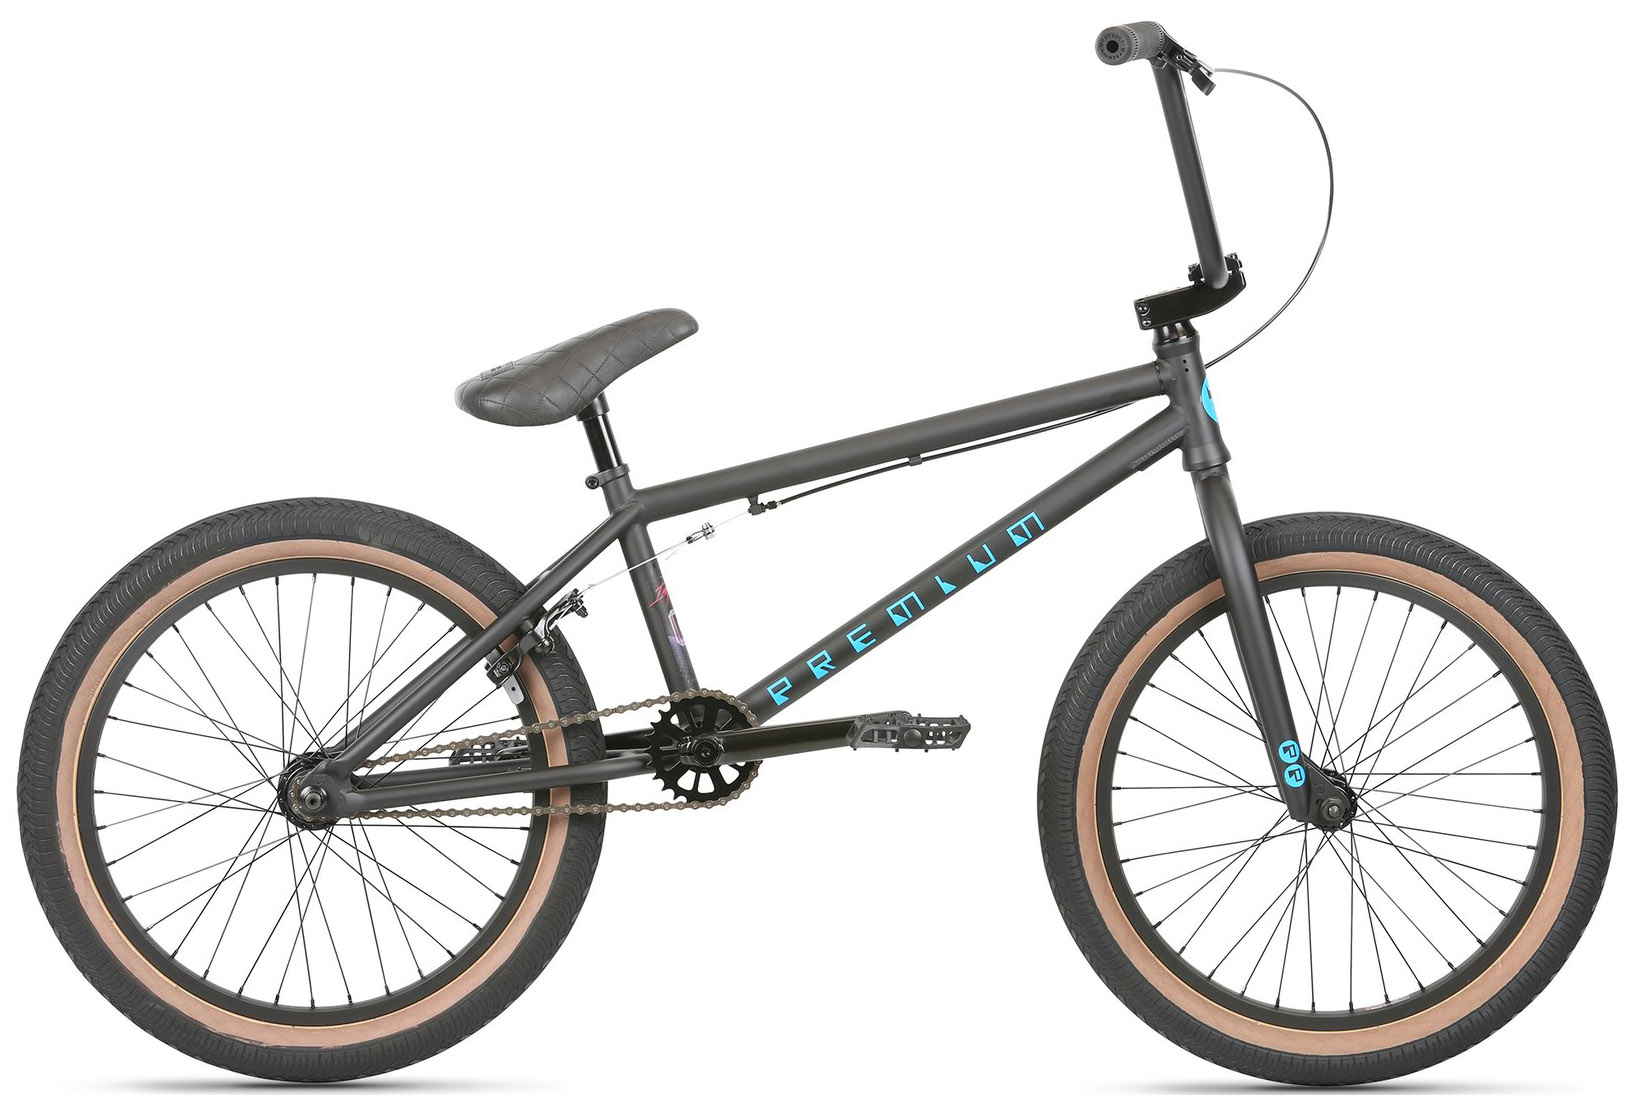  Отзывы о Велосипеде BMX Premium Inspired 2021